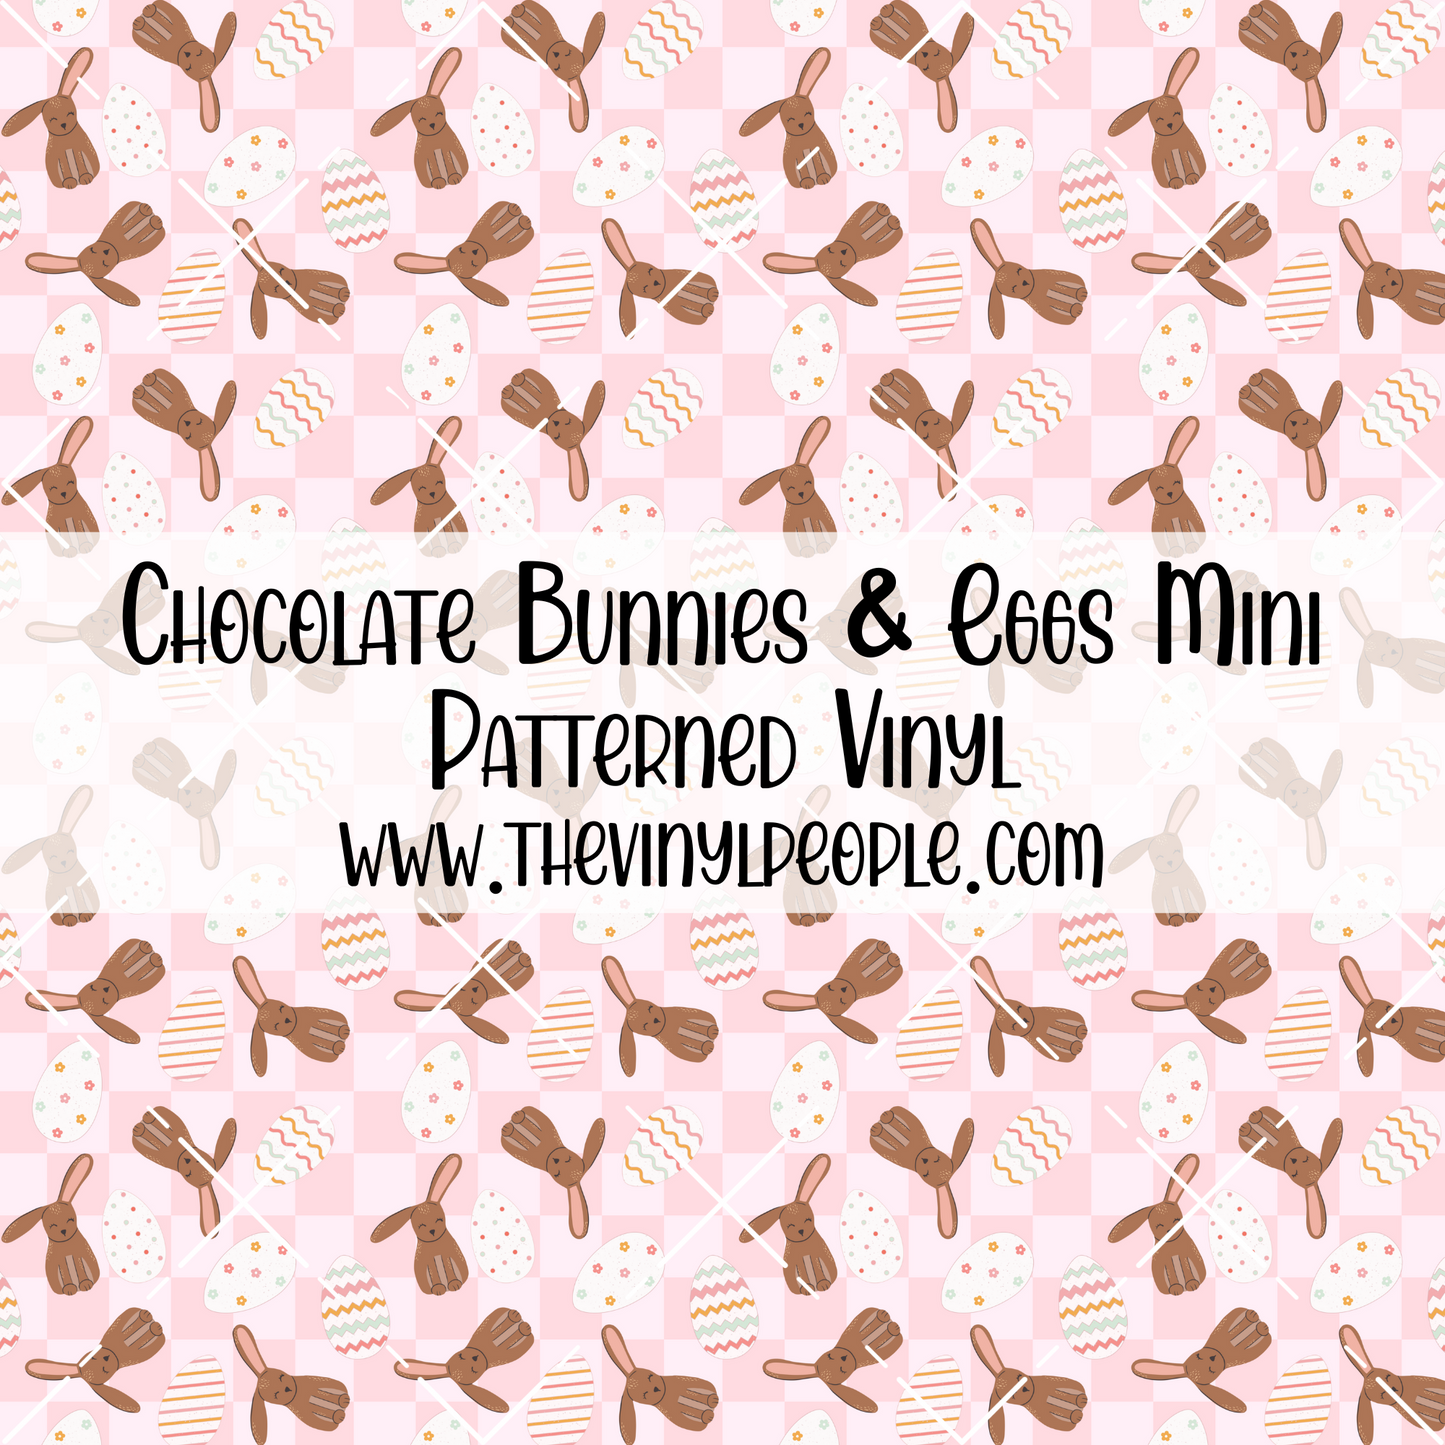 Chocolate Bunnies & Eggs Patterned Vinyl